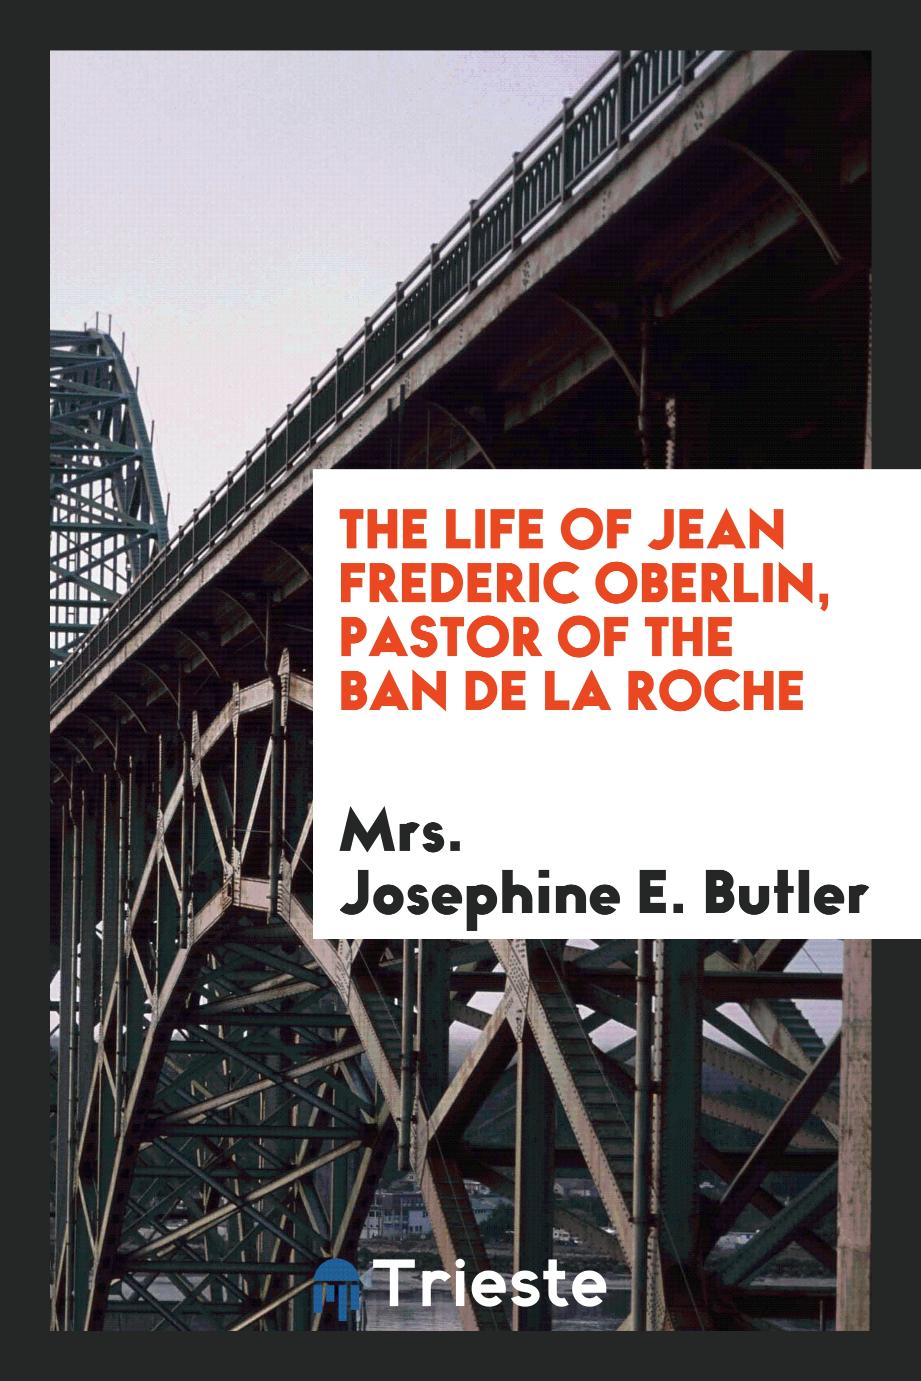 The life of Jean Frederic Oberlin, pastor of the Ban de la Roche